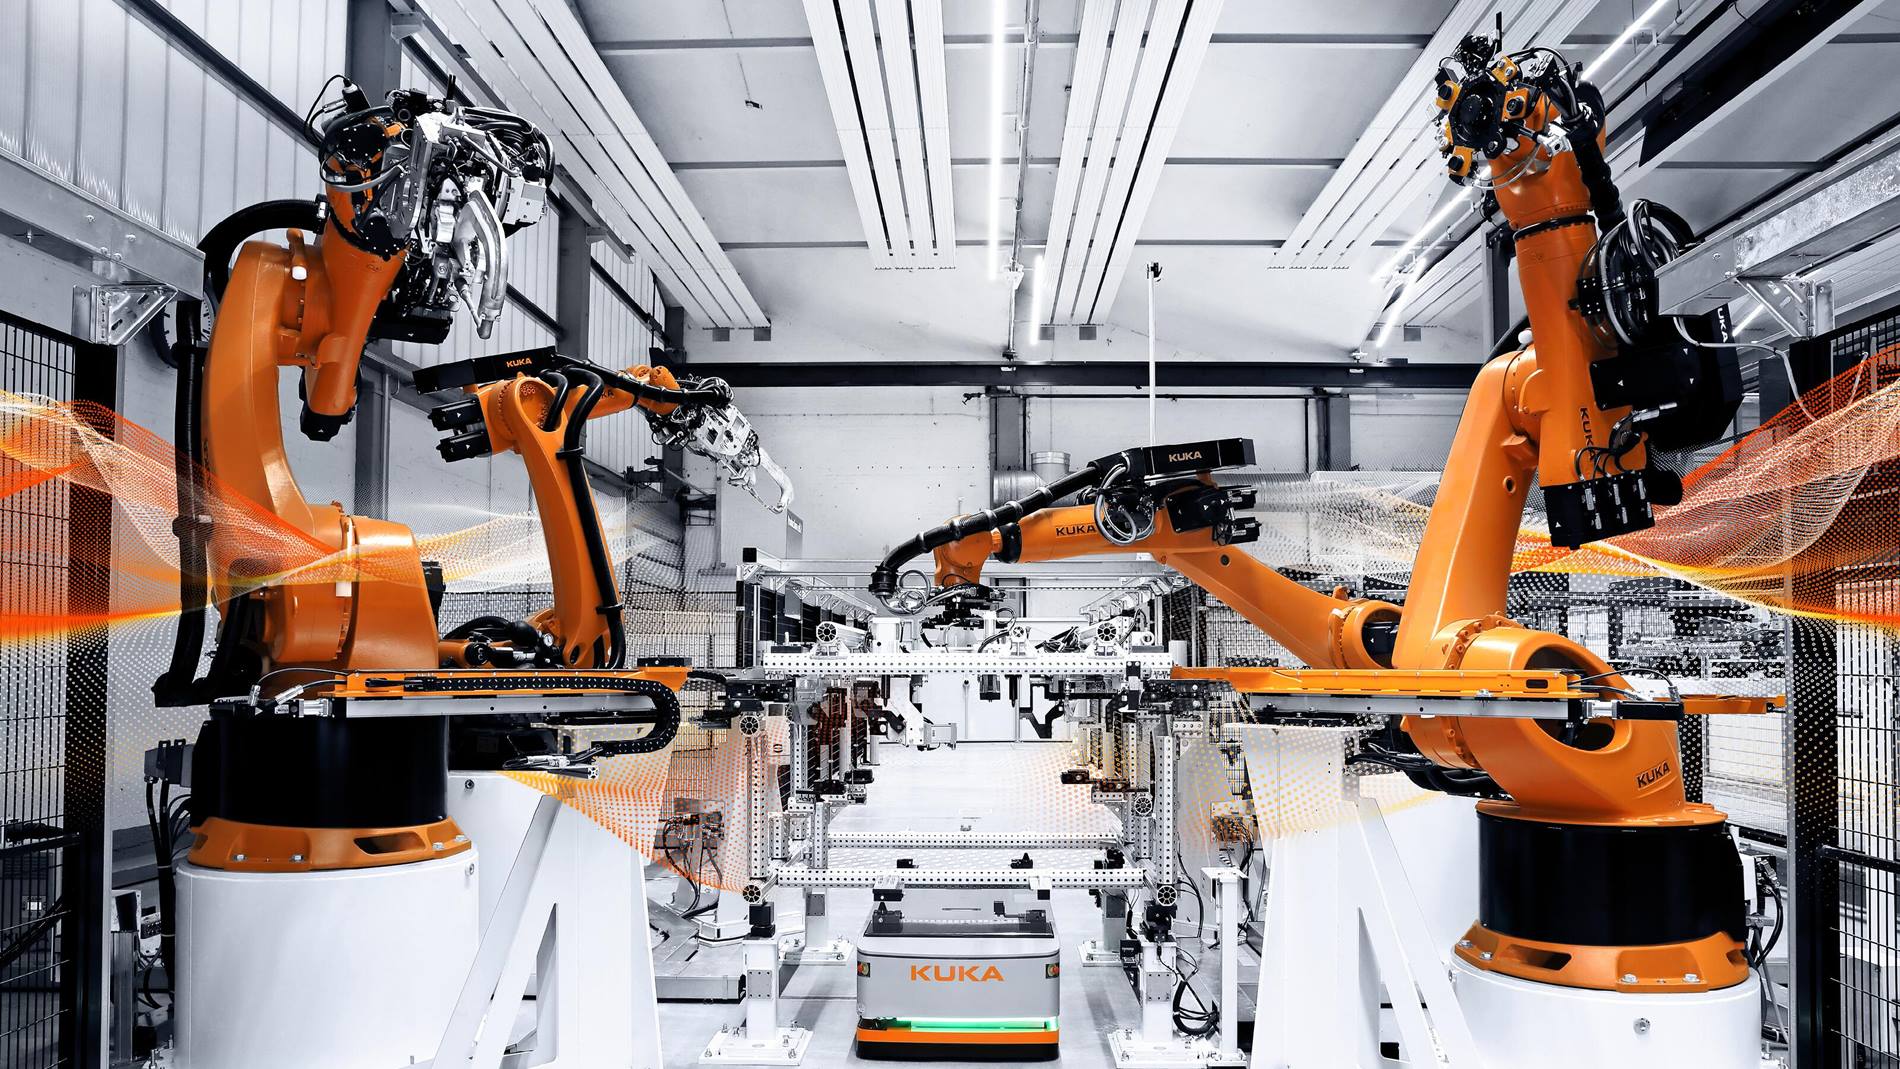 Industrial robot: it work? KUKA AG